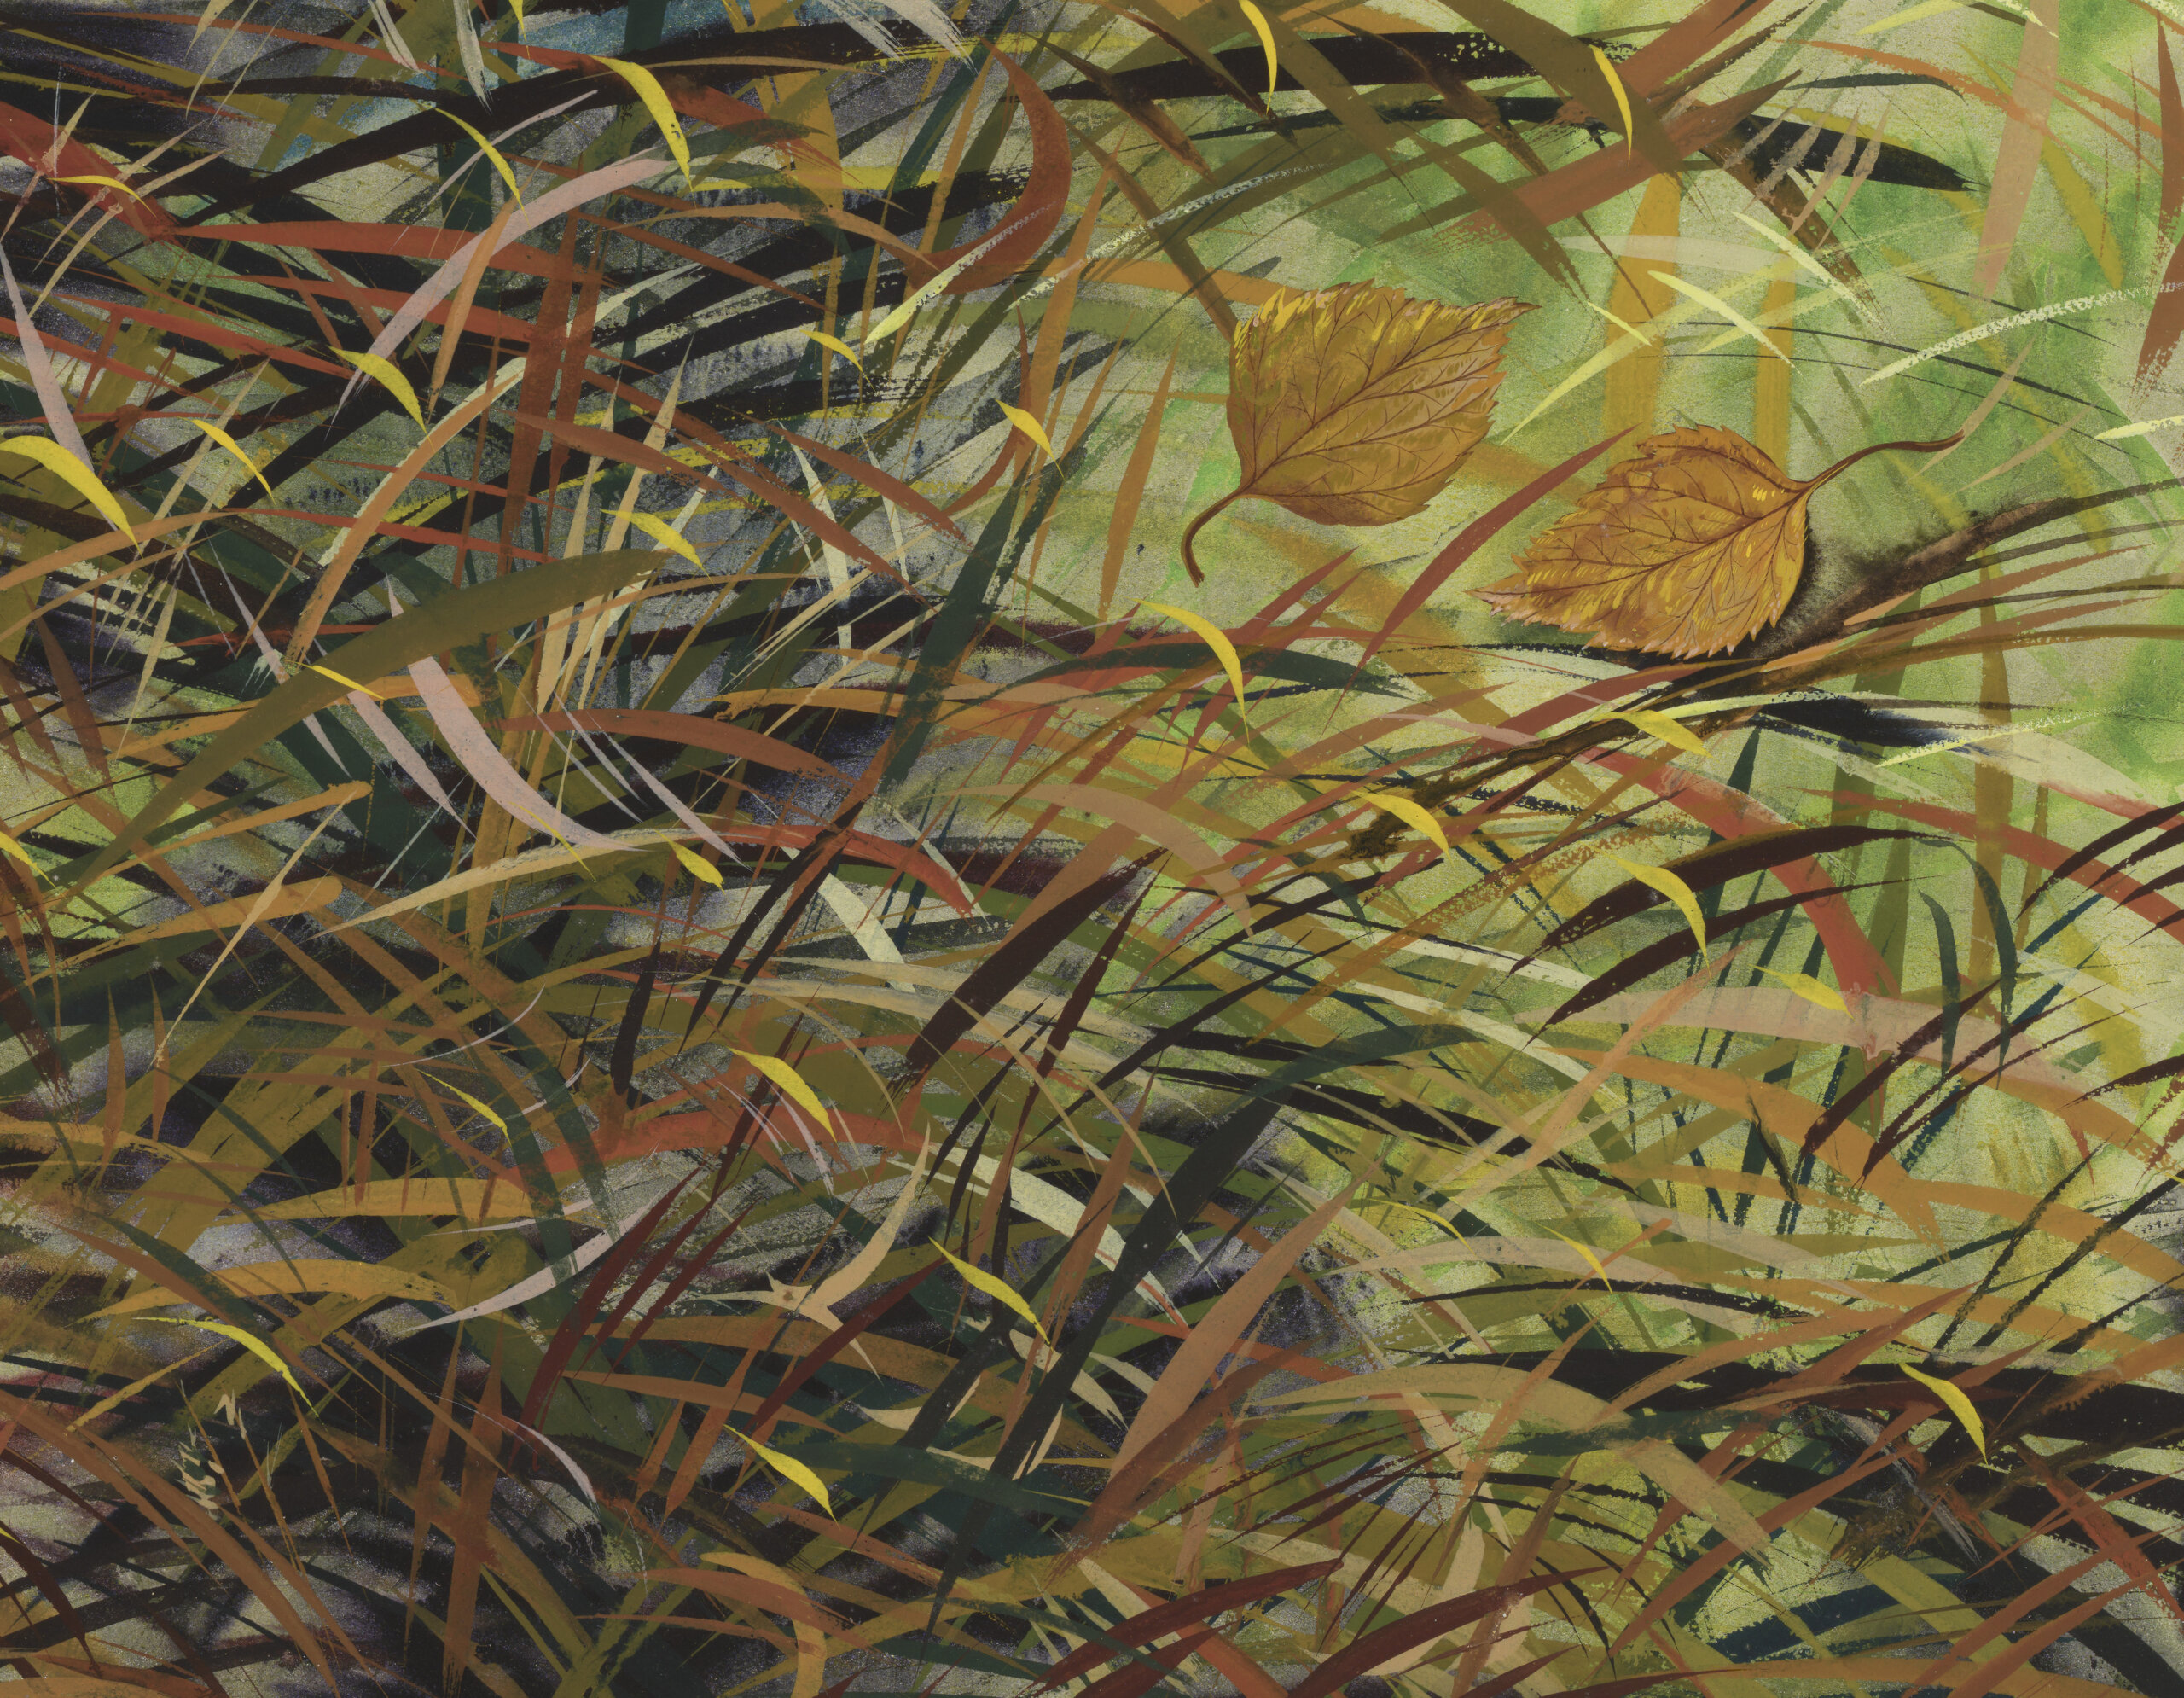 Malle Leis “Septembrituul”, 1993. 54 x 72 cm.